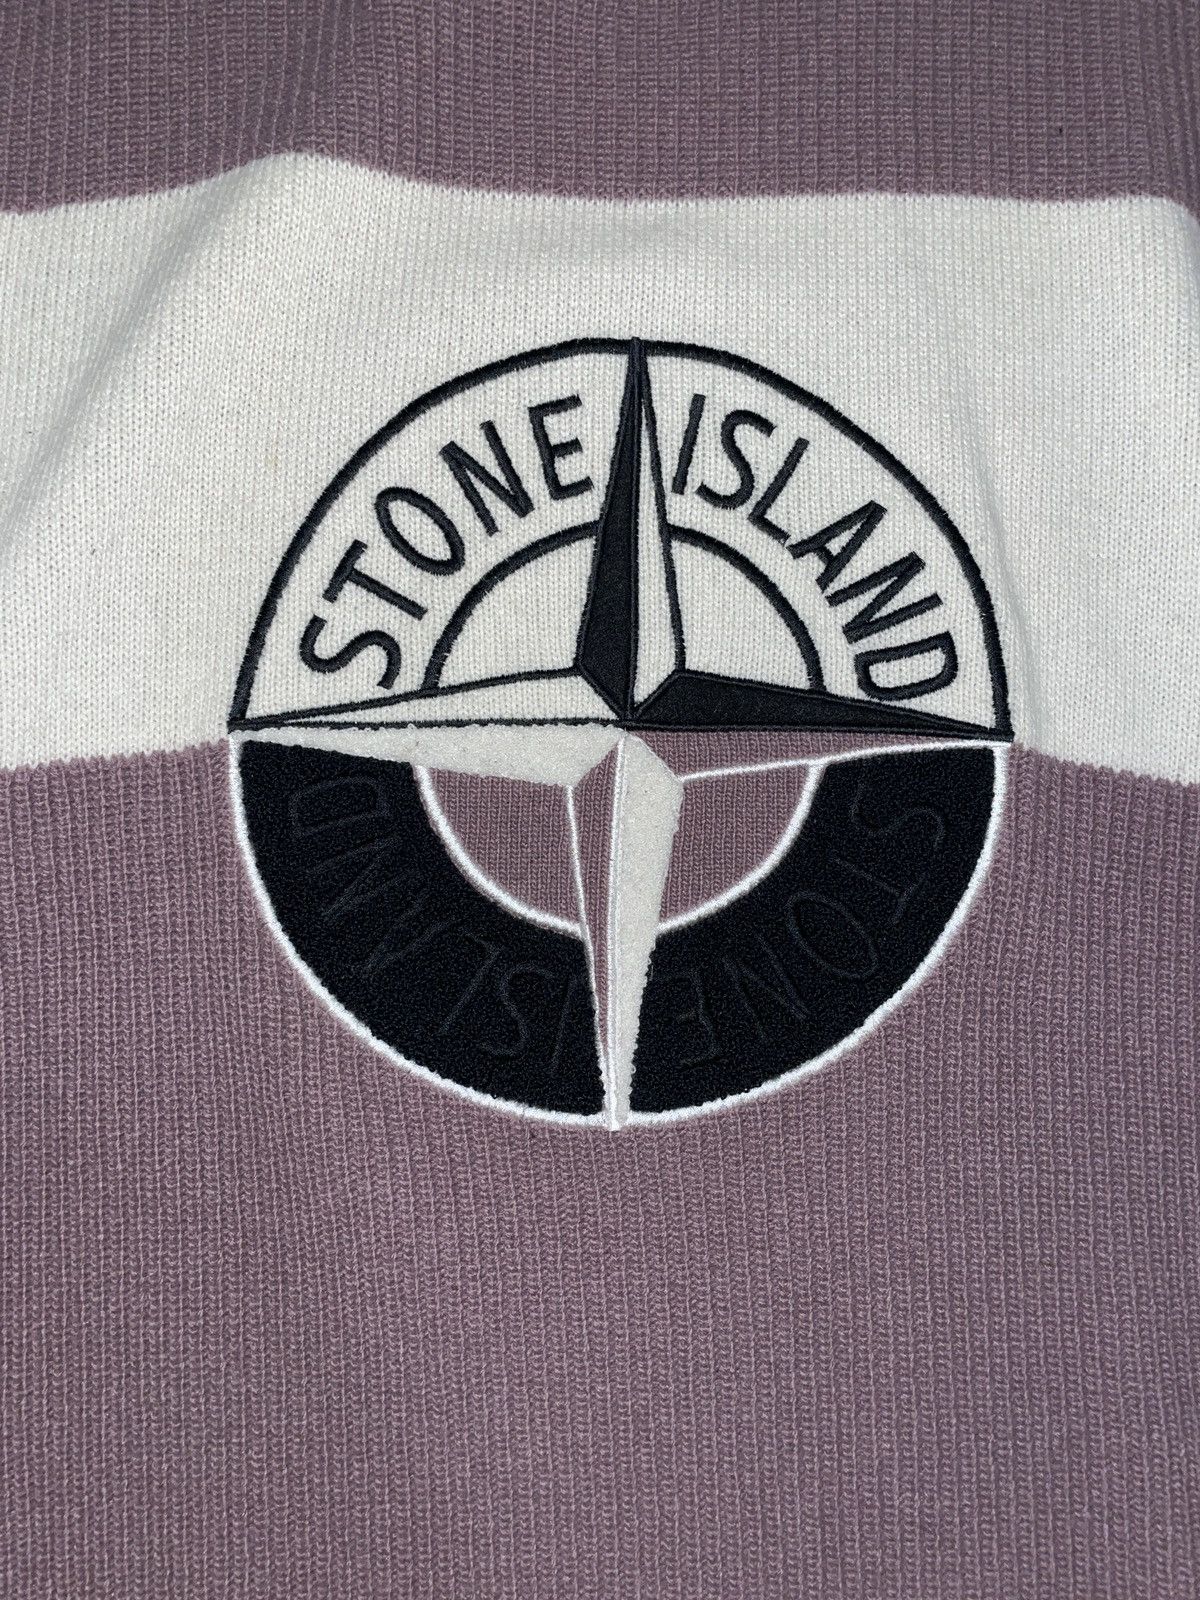 Stone Island Stone Island X Barney NYC knitted sweater exclusive Size US XXL / EU 58 / 5 - 2 Preview